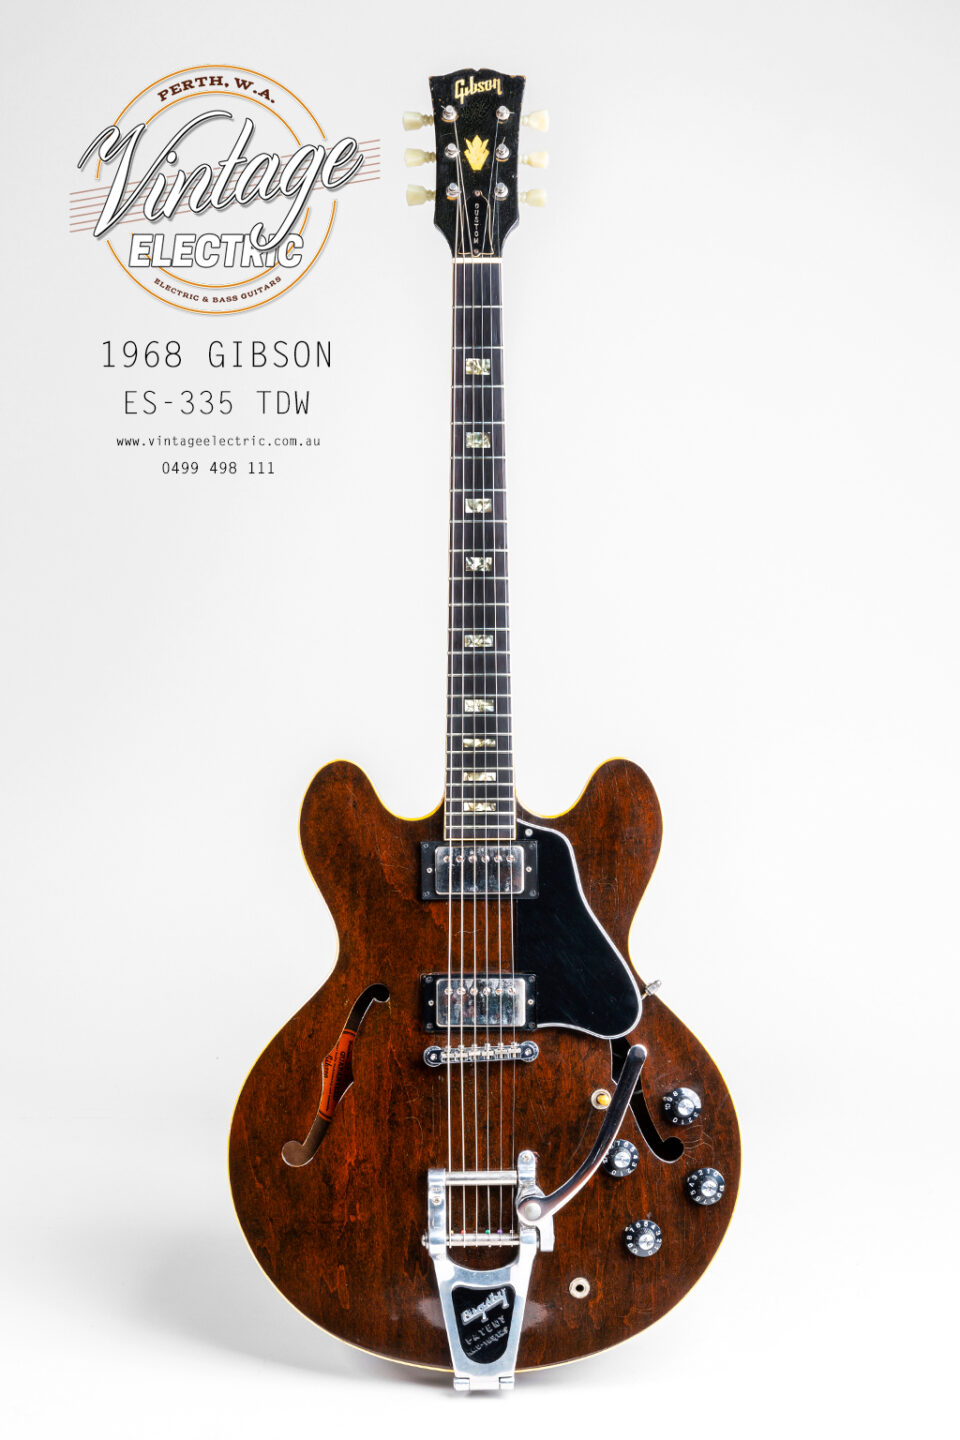 1968 Gibson ES-335 TDW Guitar